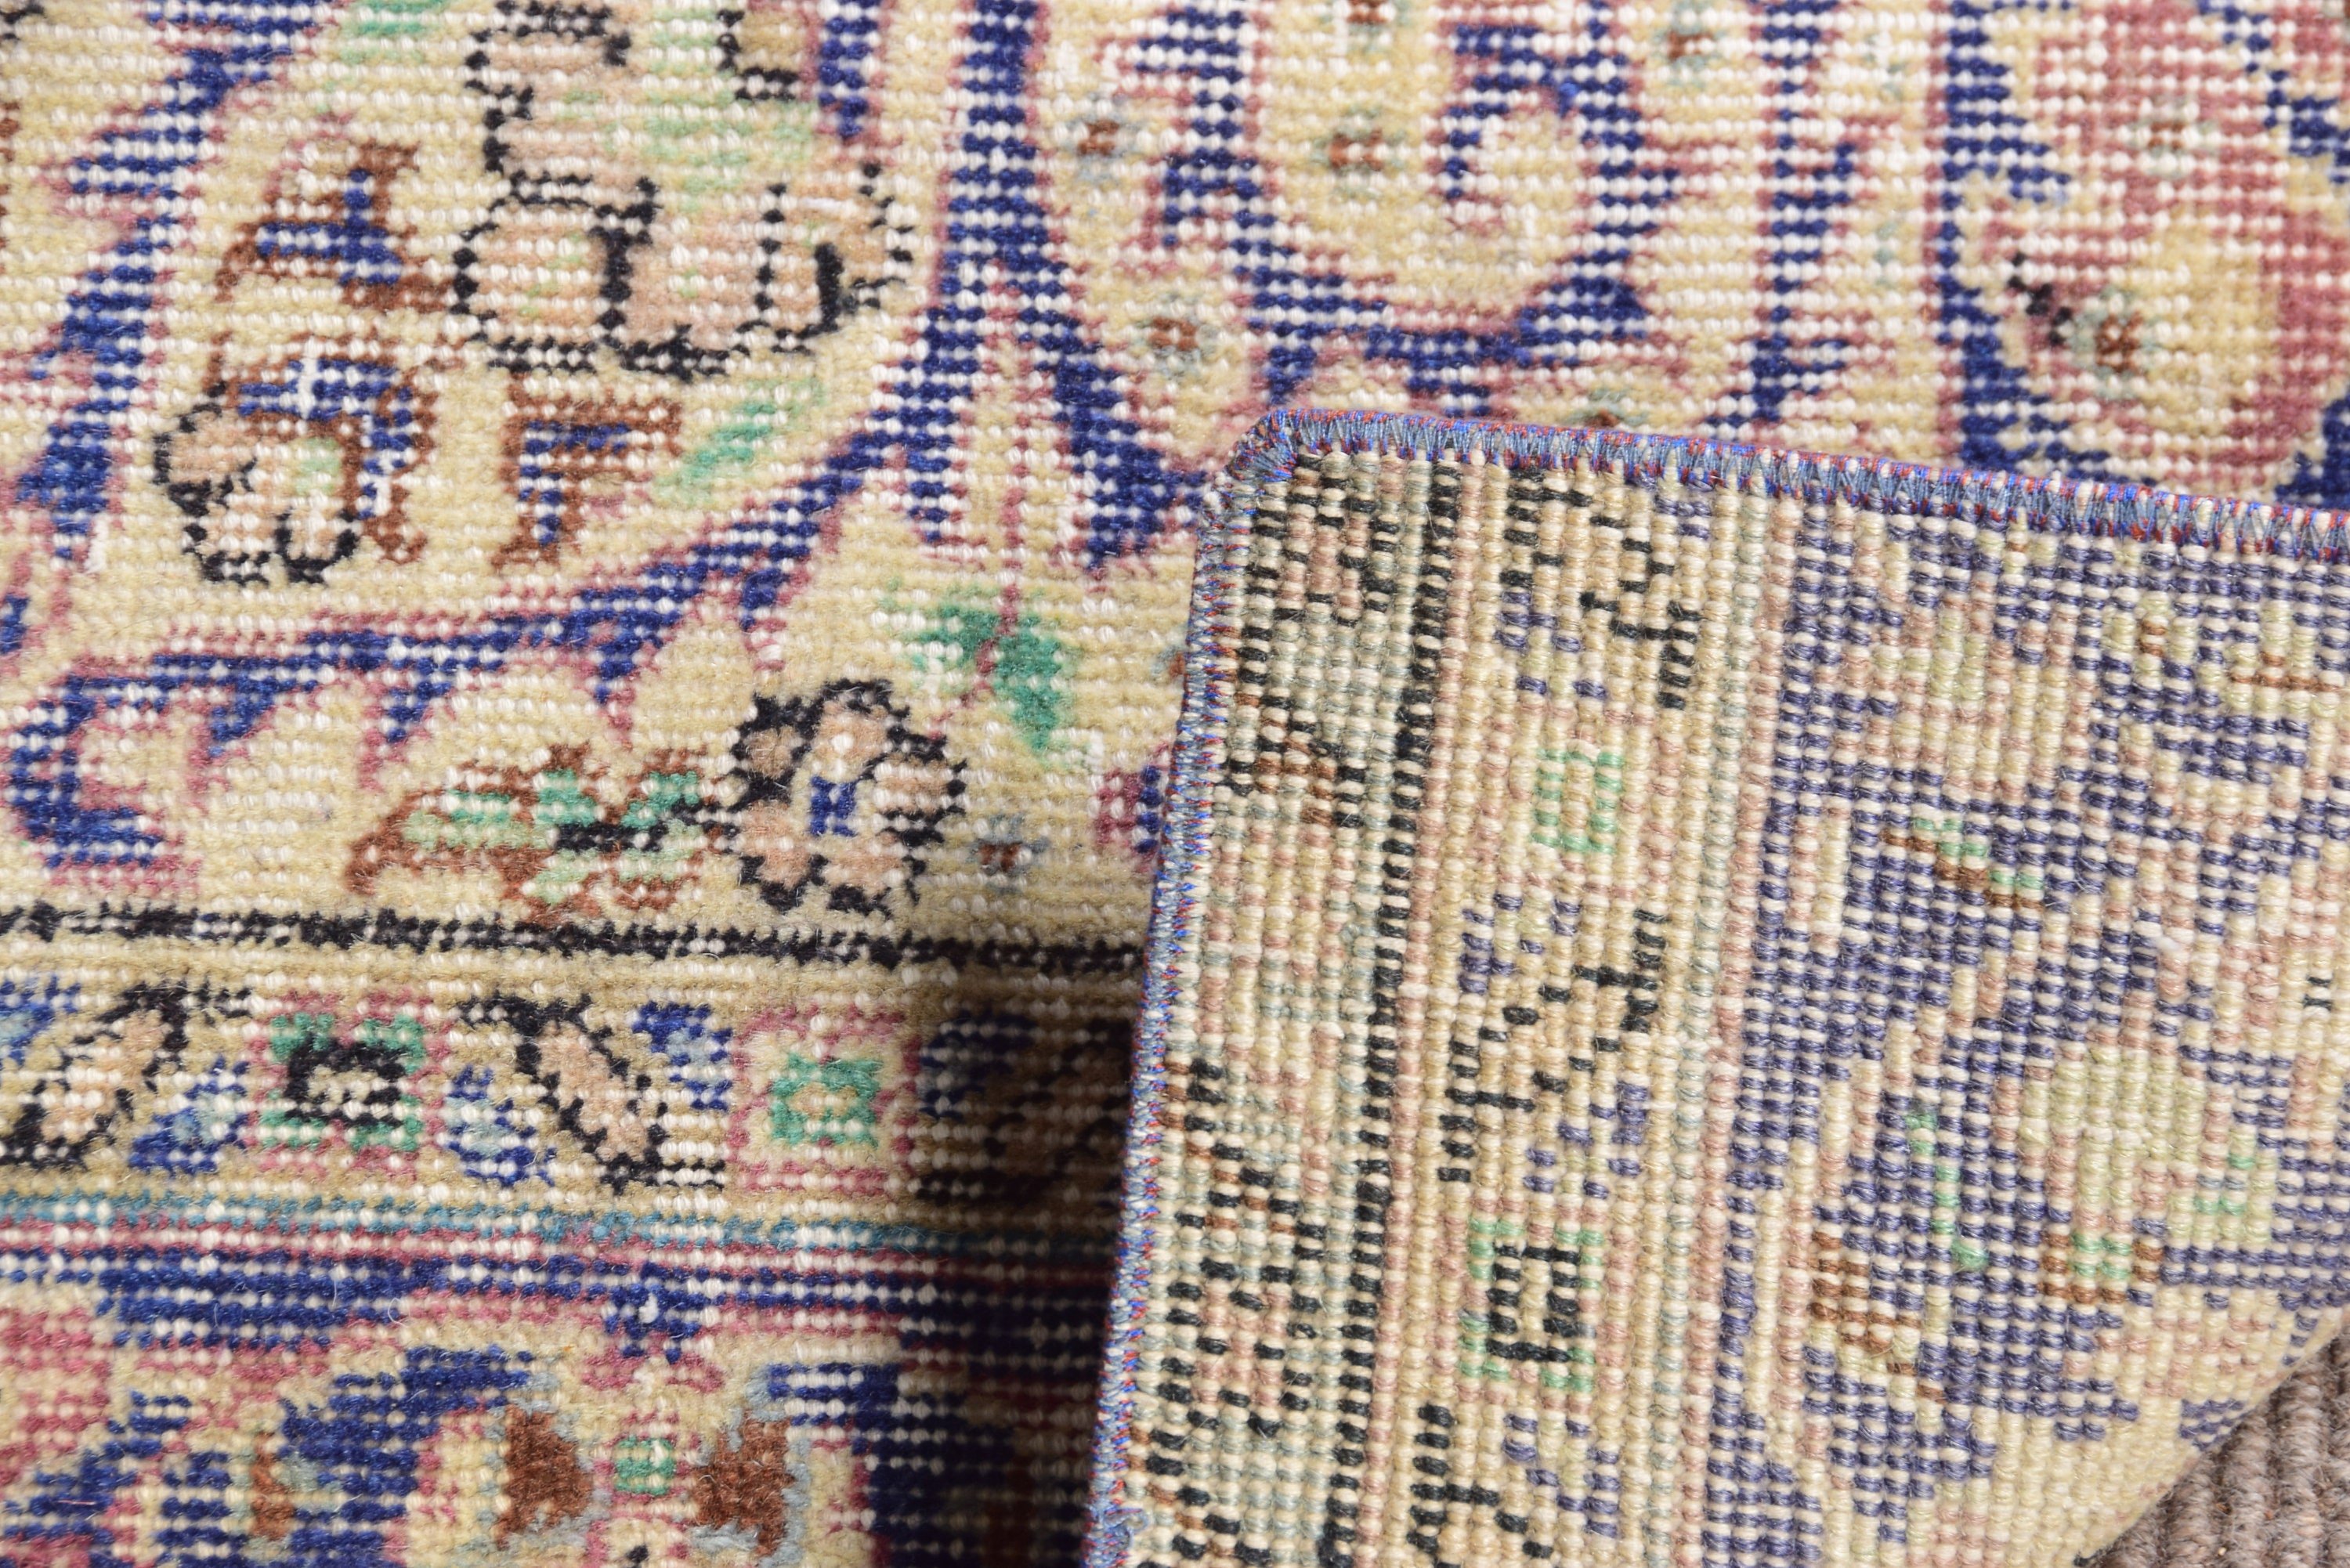 Anatolian Rugs, Turkish Rug, Bathroom Rug, Dorm Rug, Car Mat Rugs, Oriental Rugs, Vintage Rug, Beige Antique Rug, 1.6x2.6 ft Small Rug